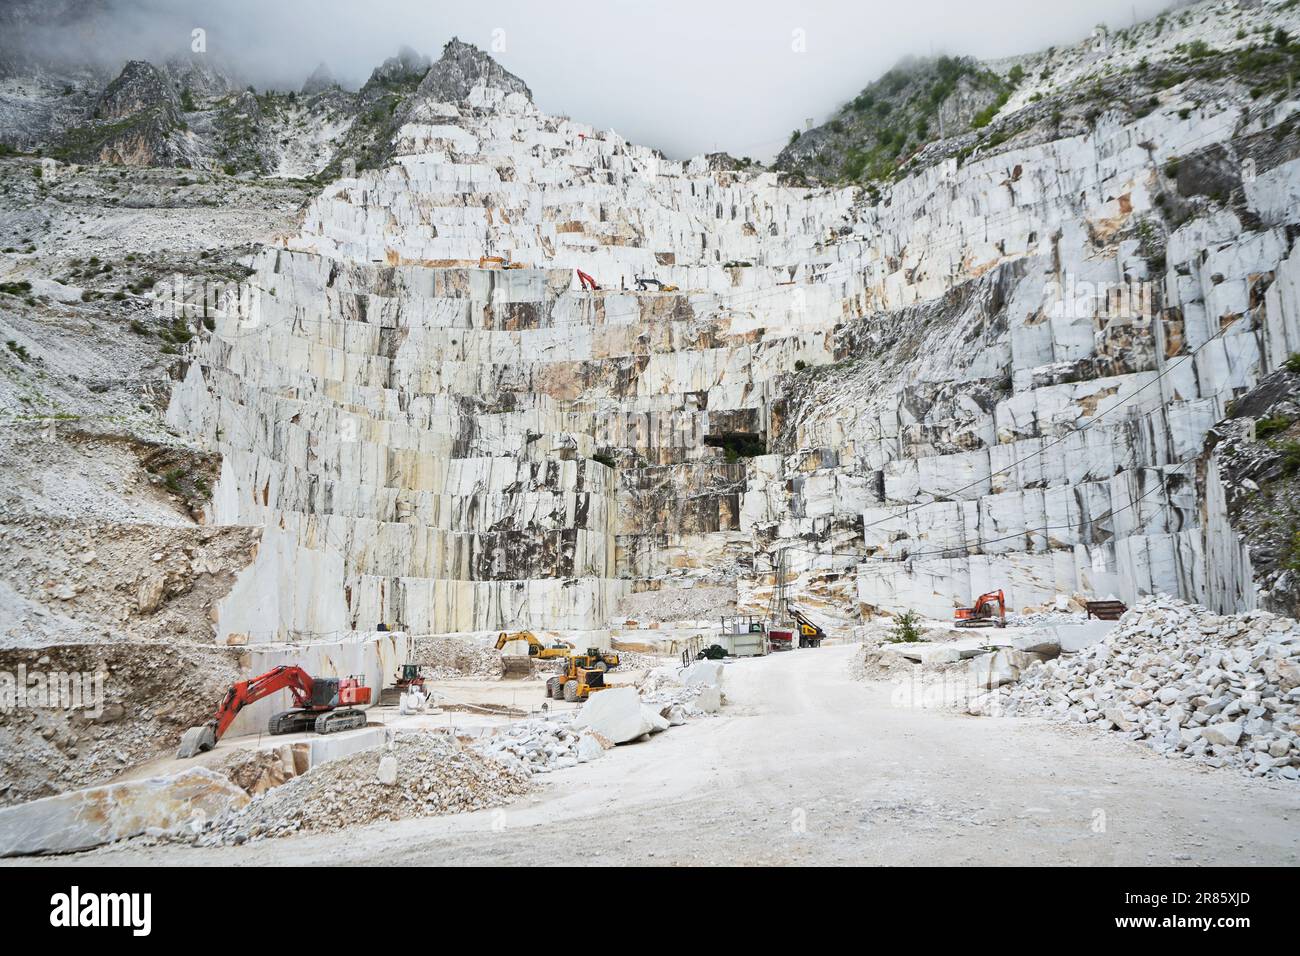 CARRARA, ITALIE - 10 juin 2023 : vue sur le site industriel de la carrière de marbre de Carrara Banque D'Images